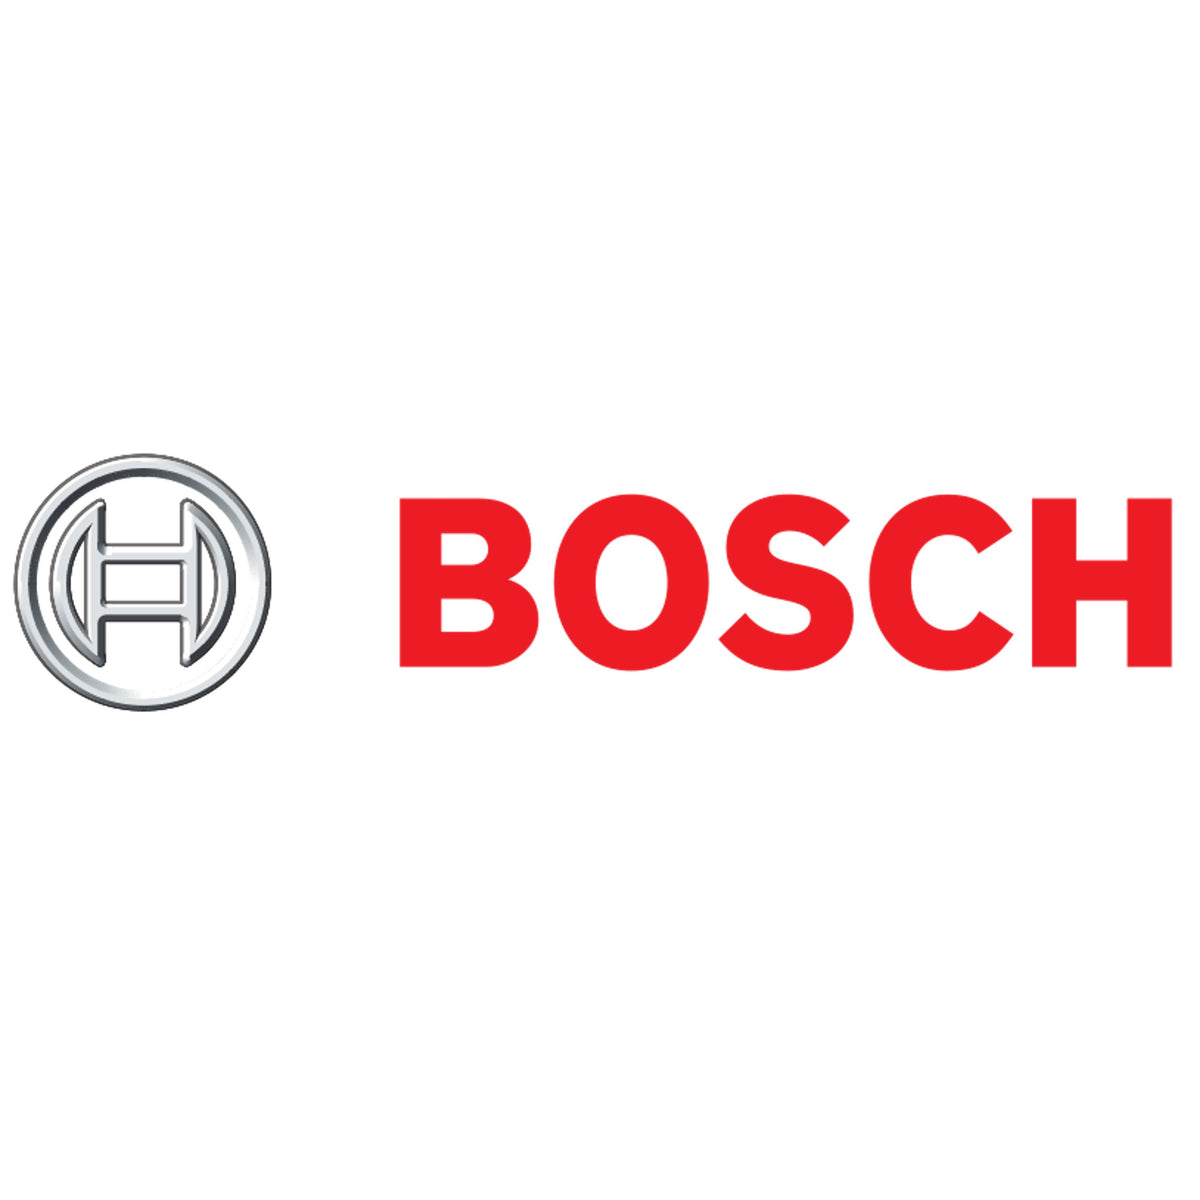 Termo eléctrico Bosch 120 Litros     7736503353